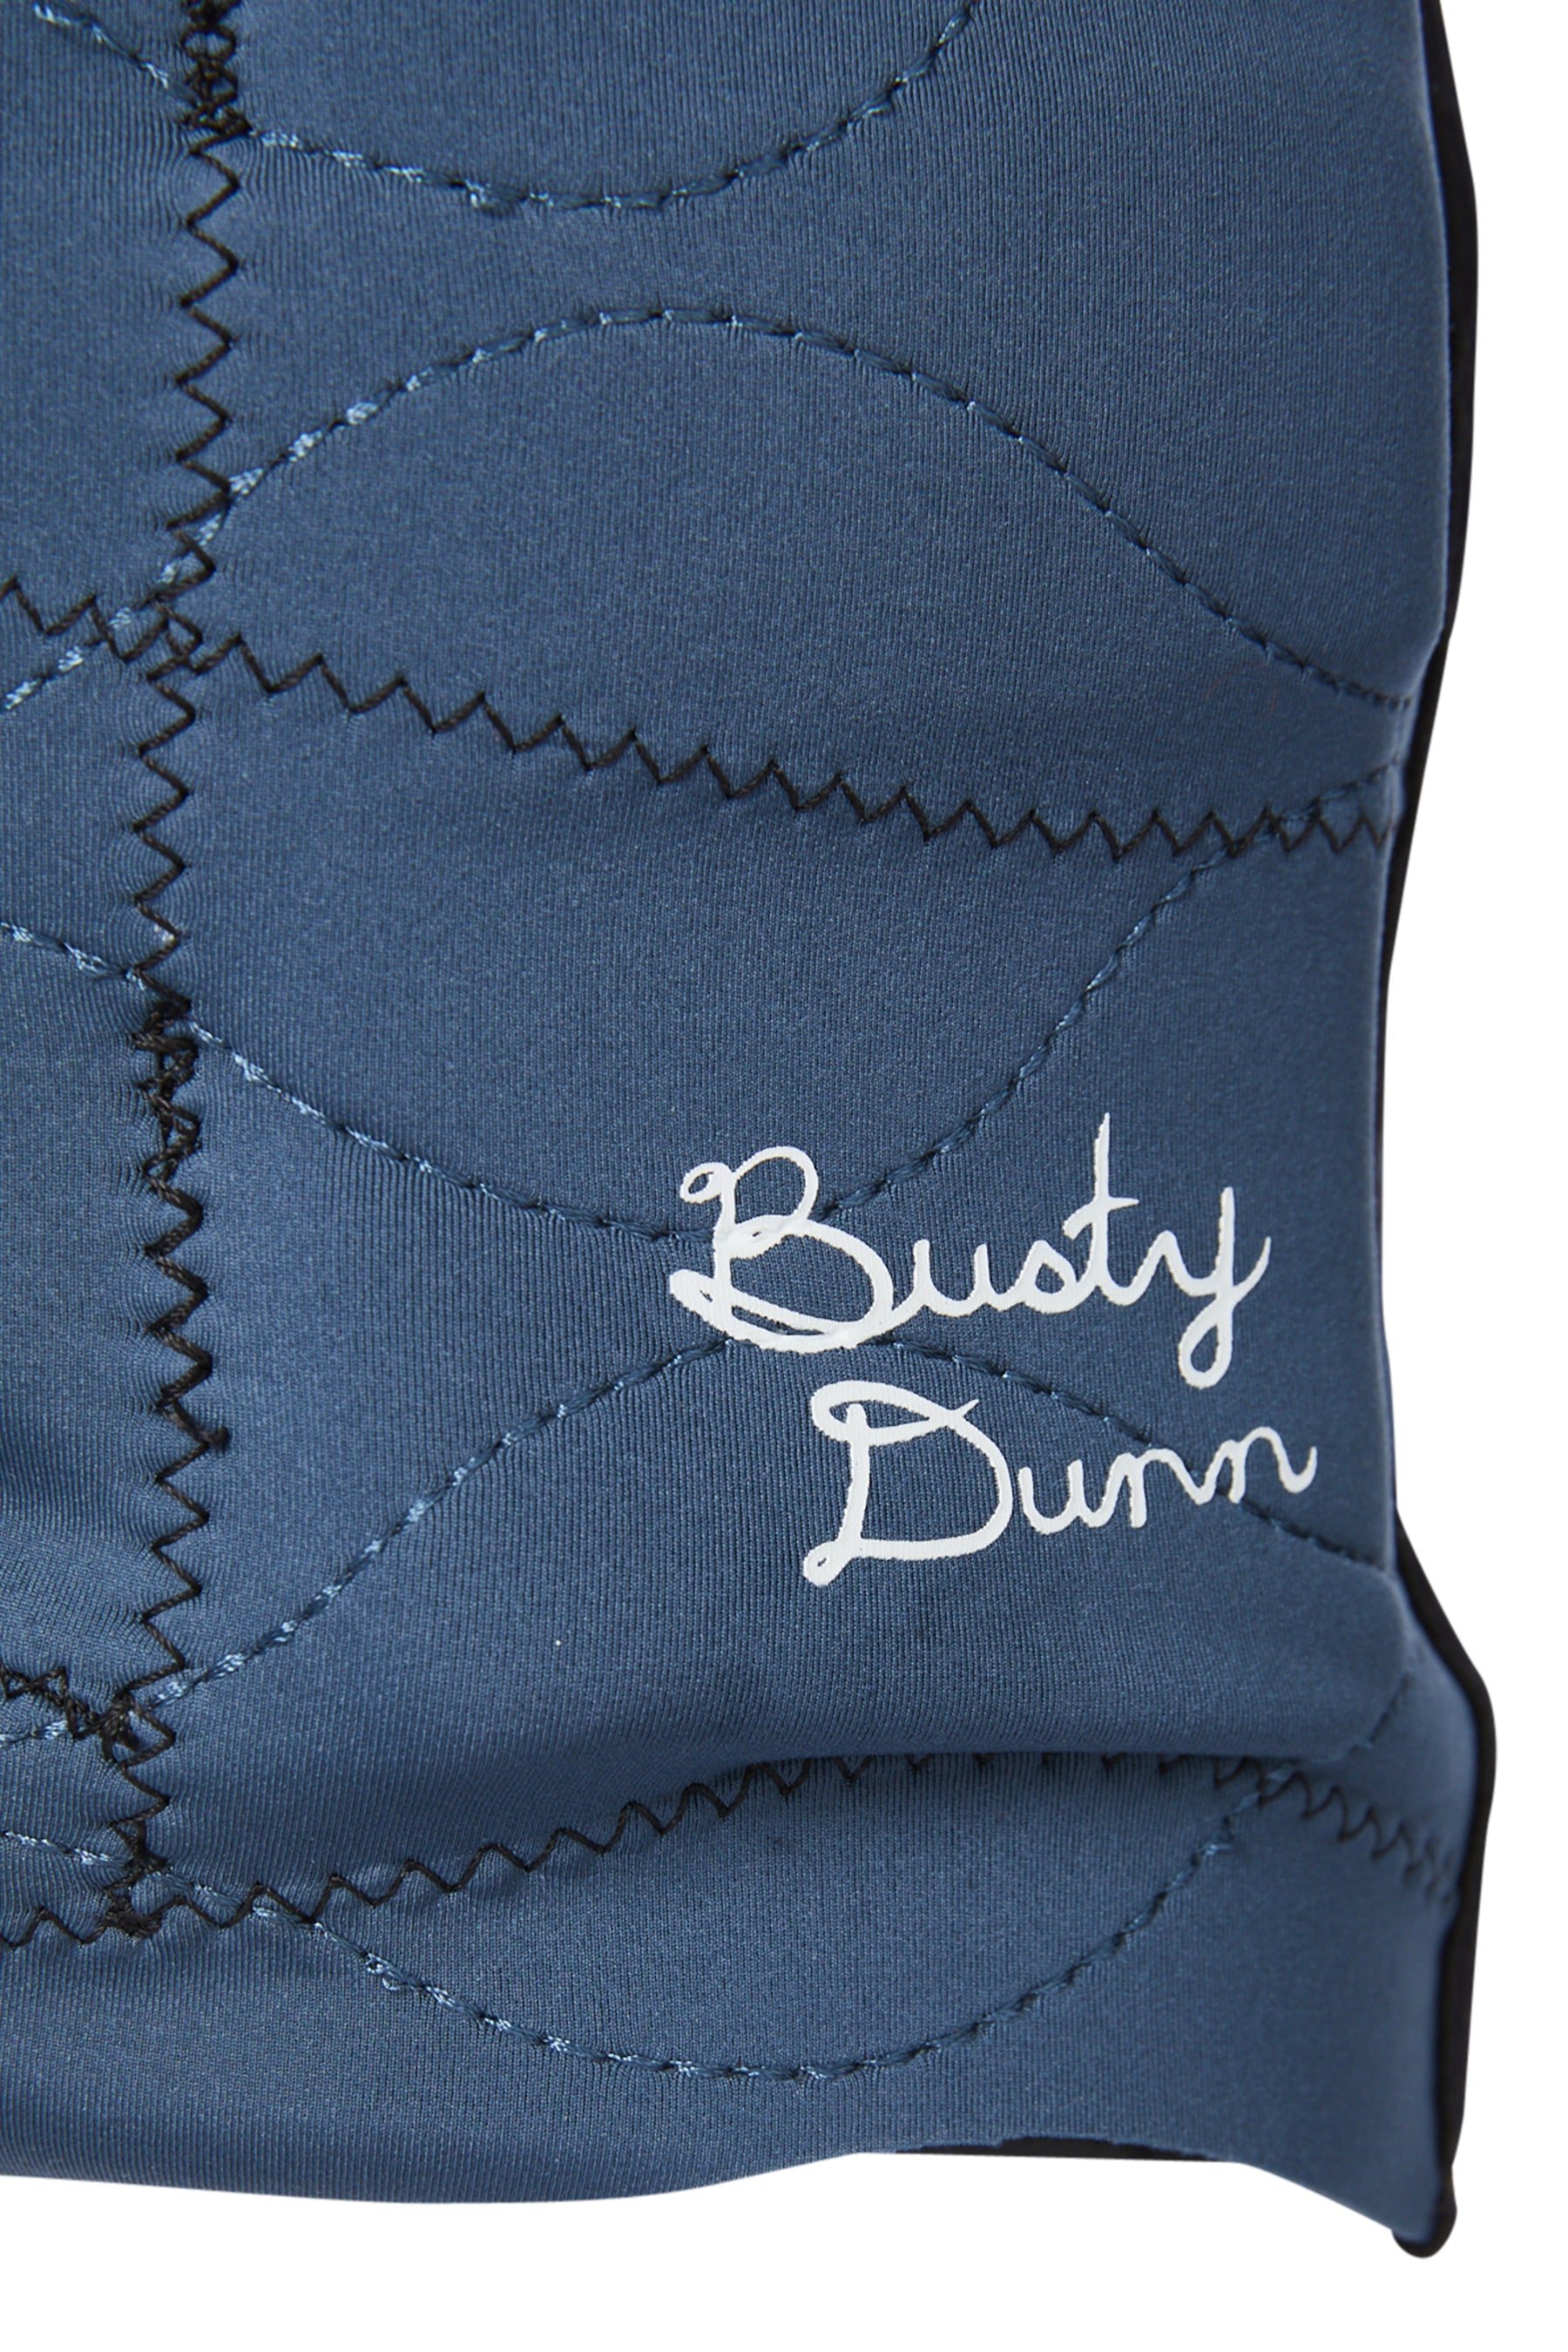 X1 F/E Mens Life Jacket - Busty Dunn Slate 7